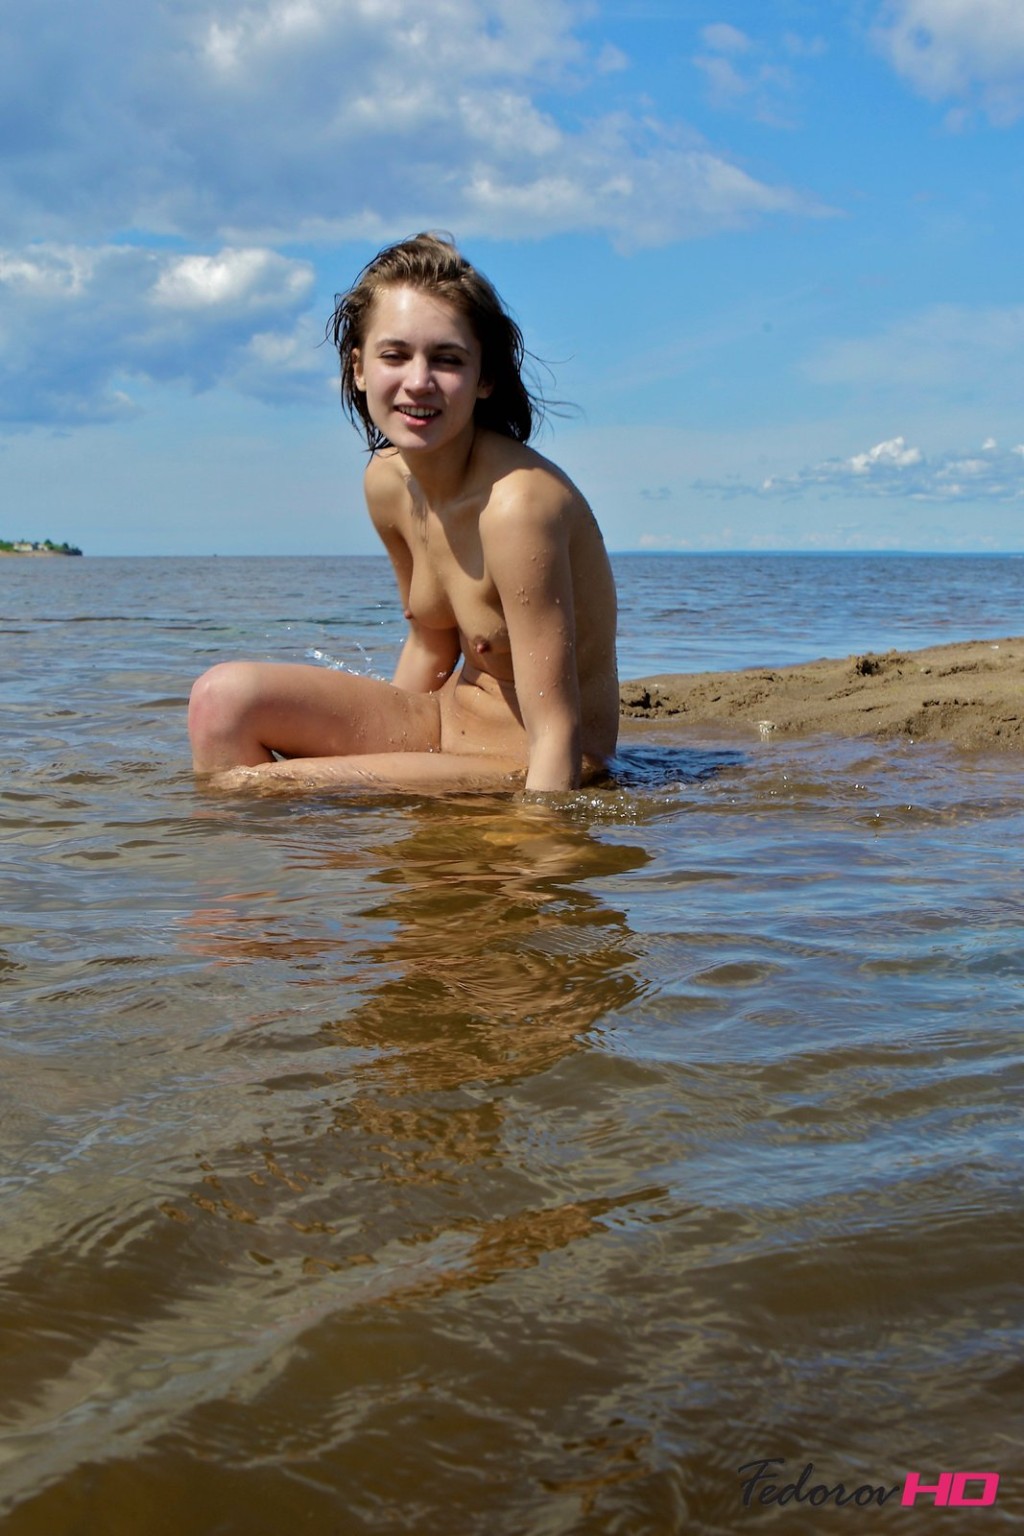 Fedorov-hd-Lera-gulf-teen-erotic-nude-beach-photography #70222339